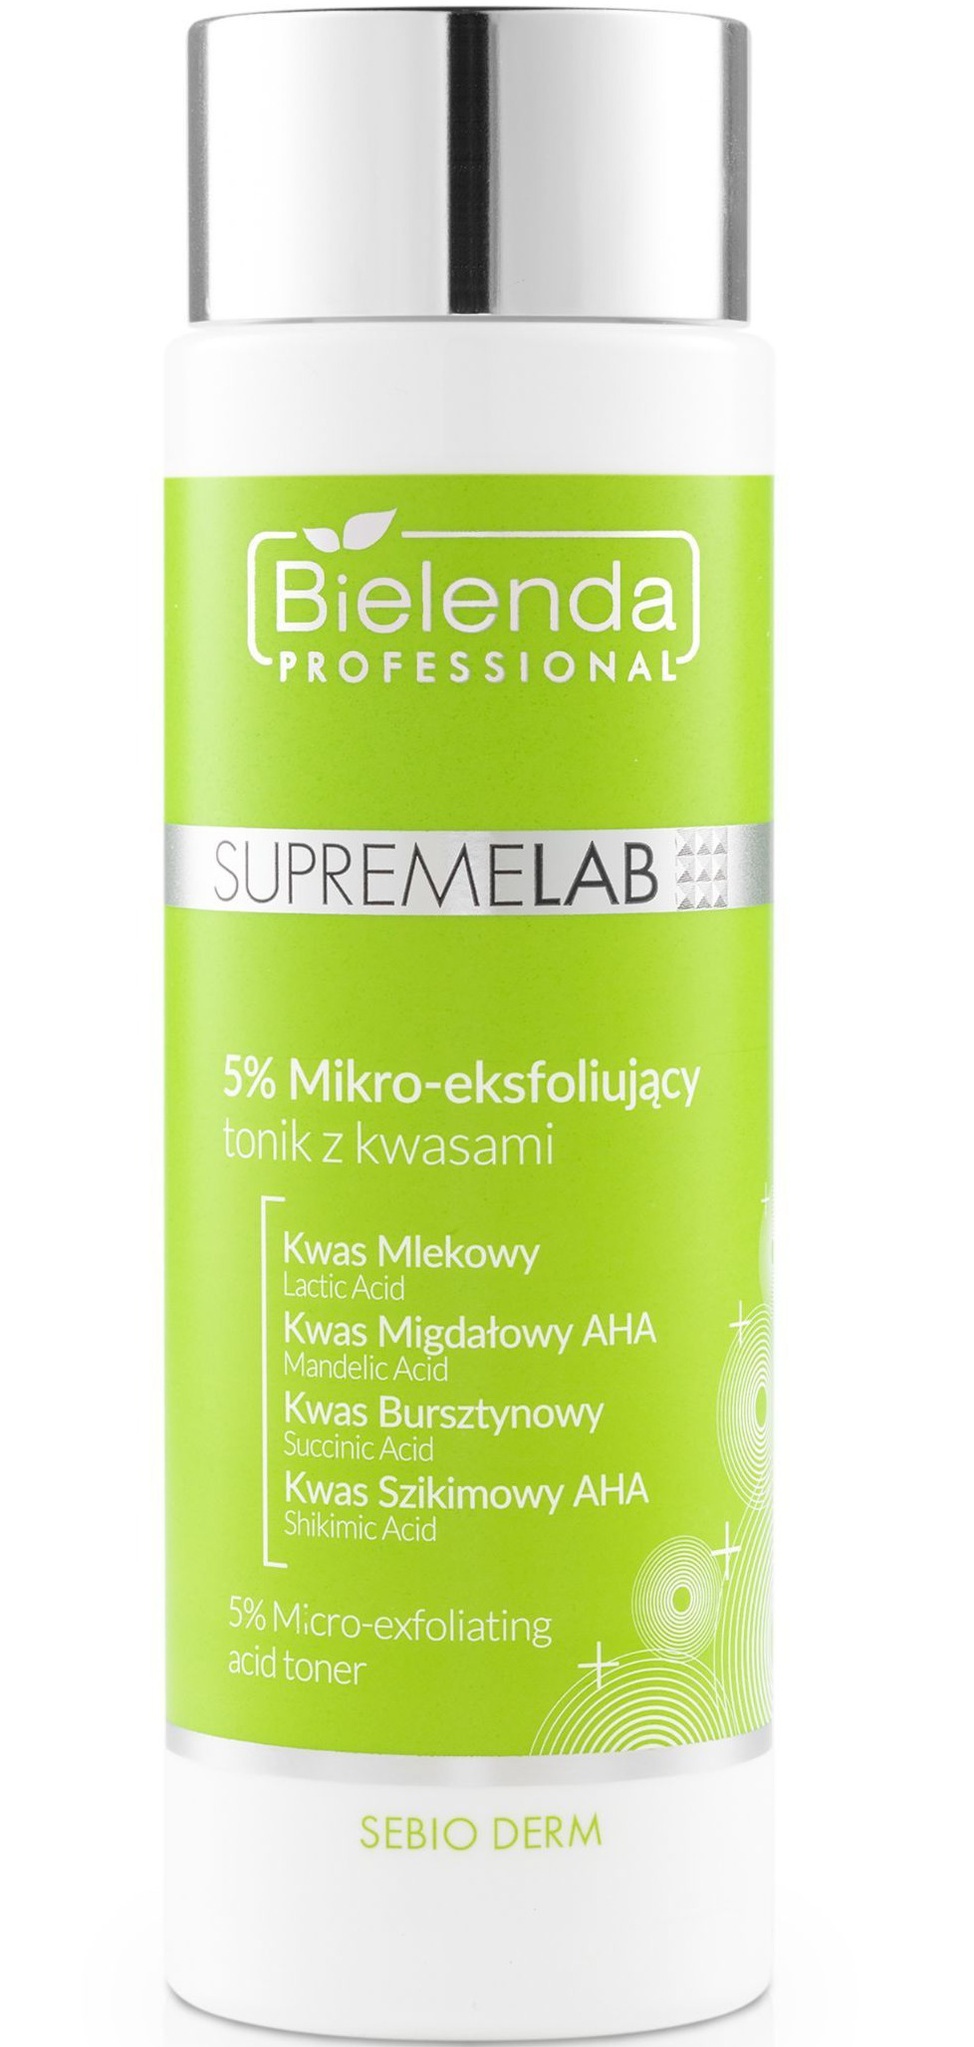 Bielenda Professional Supremelab Sebio Derm 5% Micro-Exfoliating Acid Toner